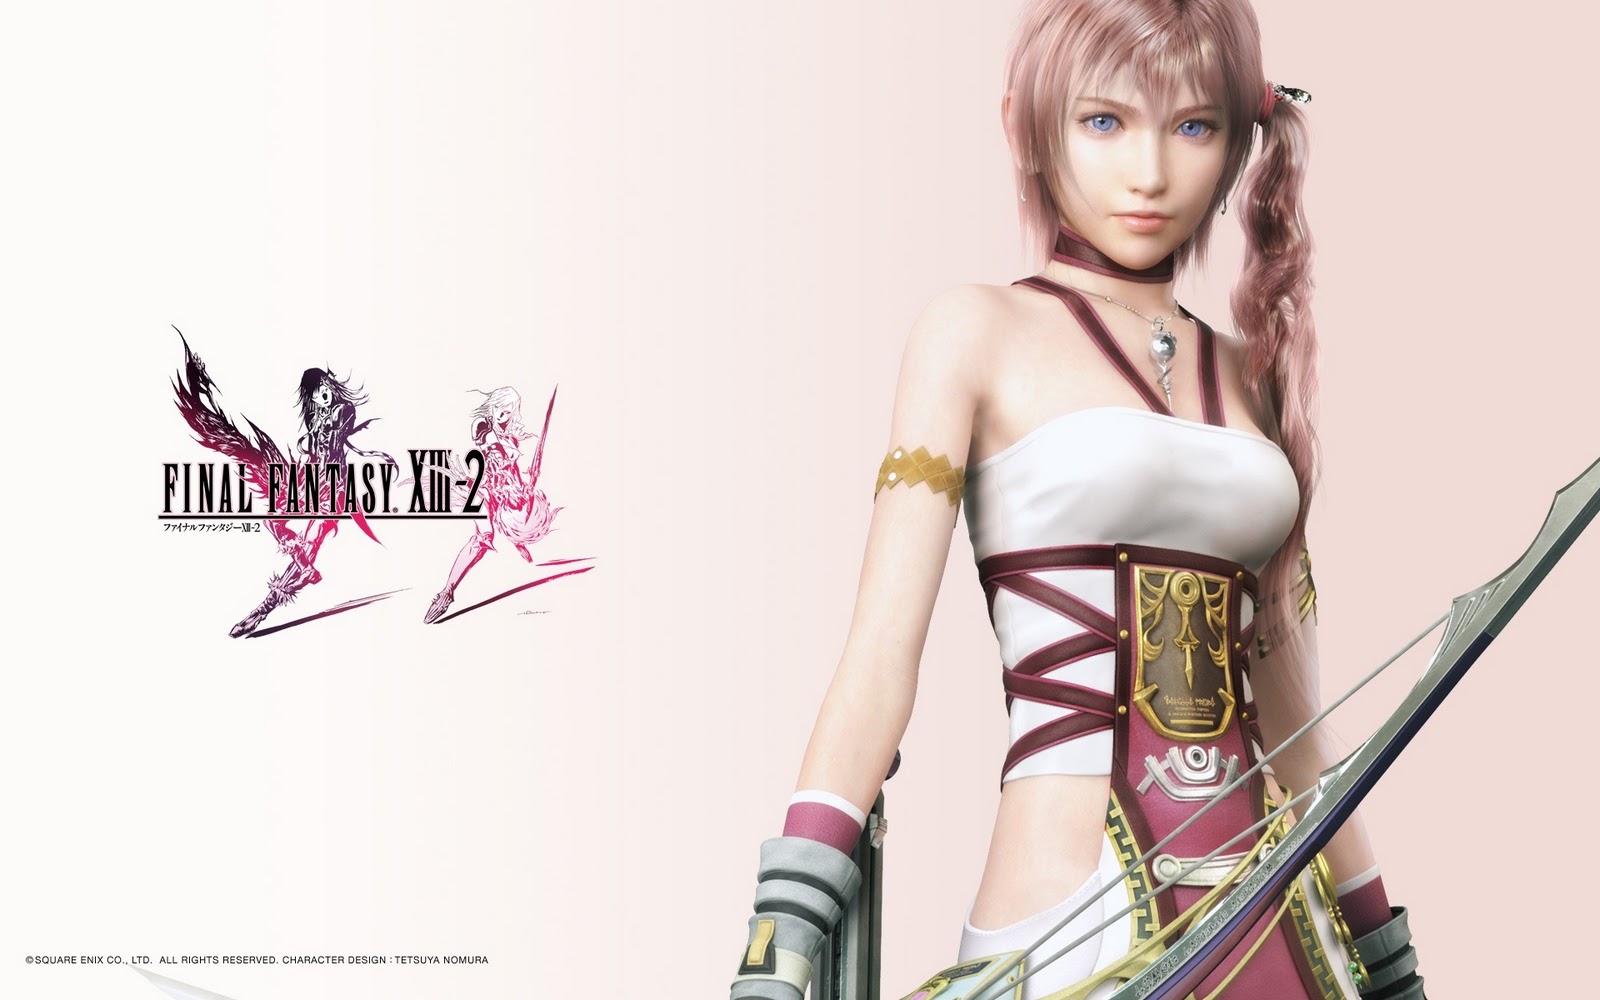 The Bing Final Fantasy Xiii 2 Game Wallpaper